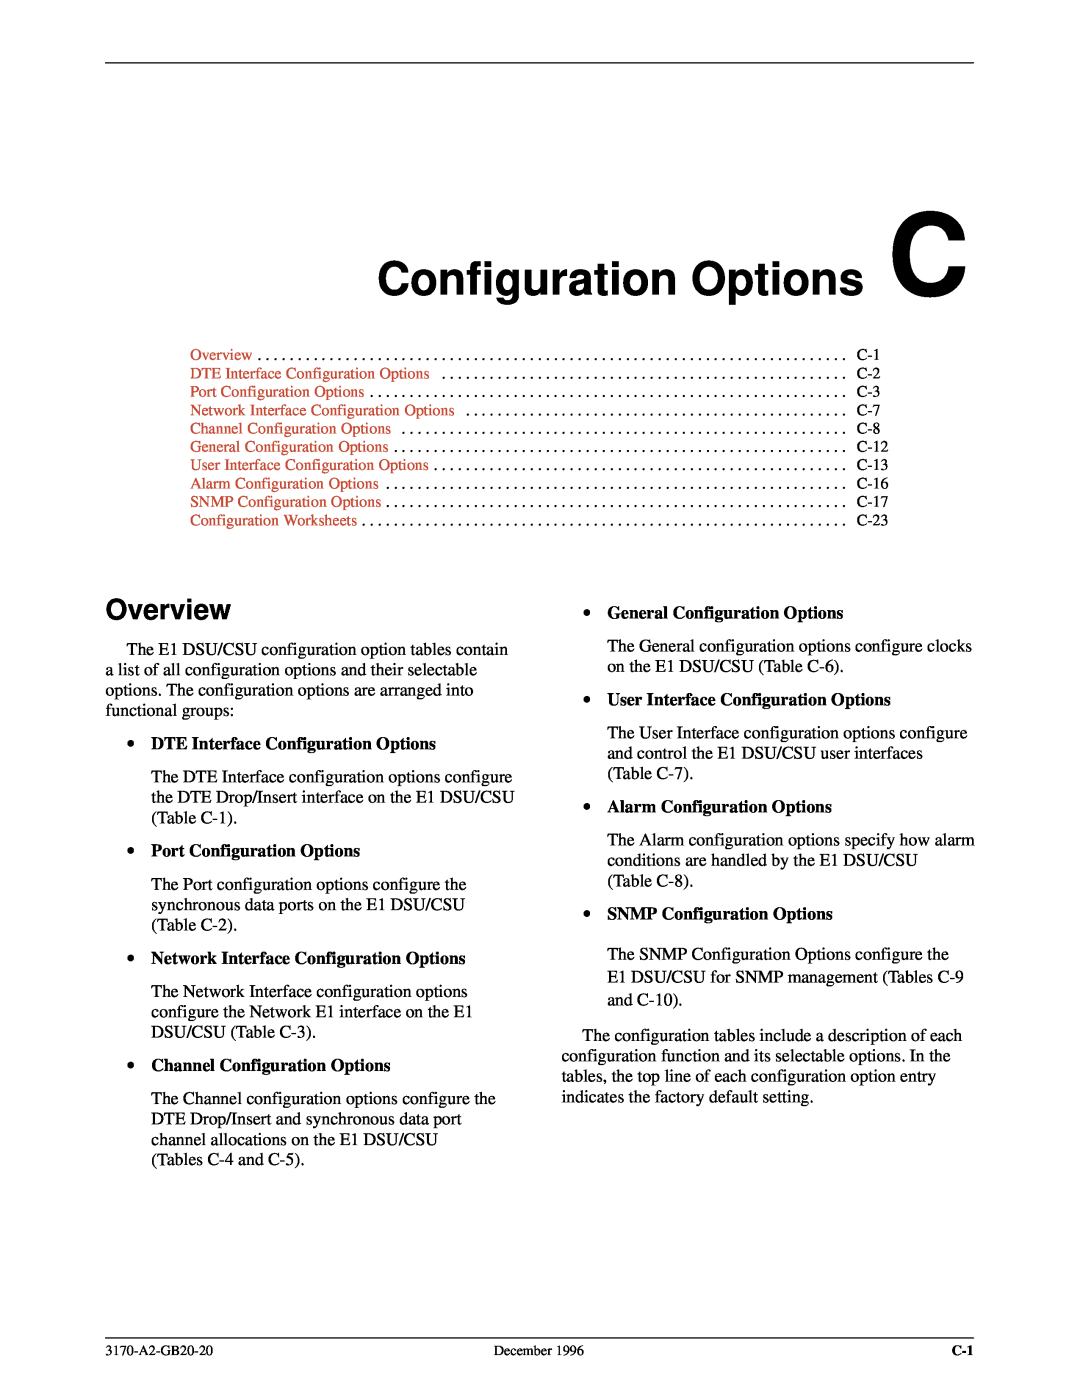 Paradyne 317x E1 manual Configuration Options C, Overview, DTE Interface Configuration Options, Port Configuration Options 